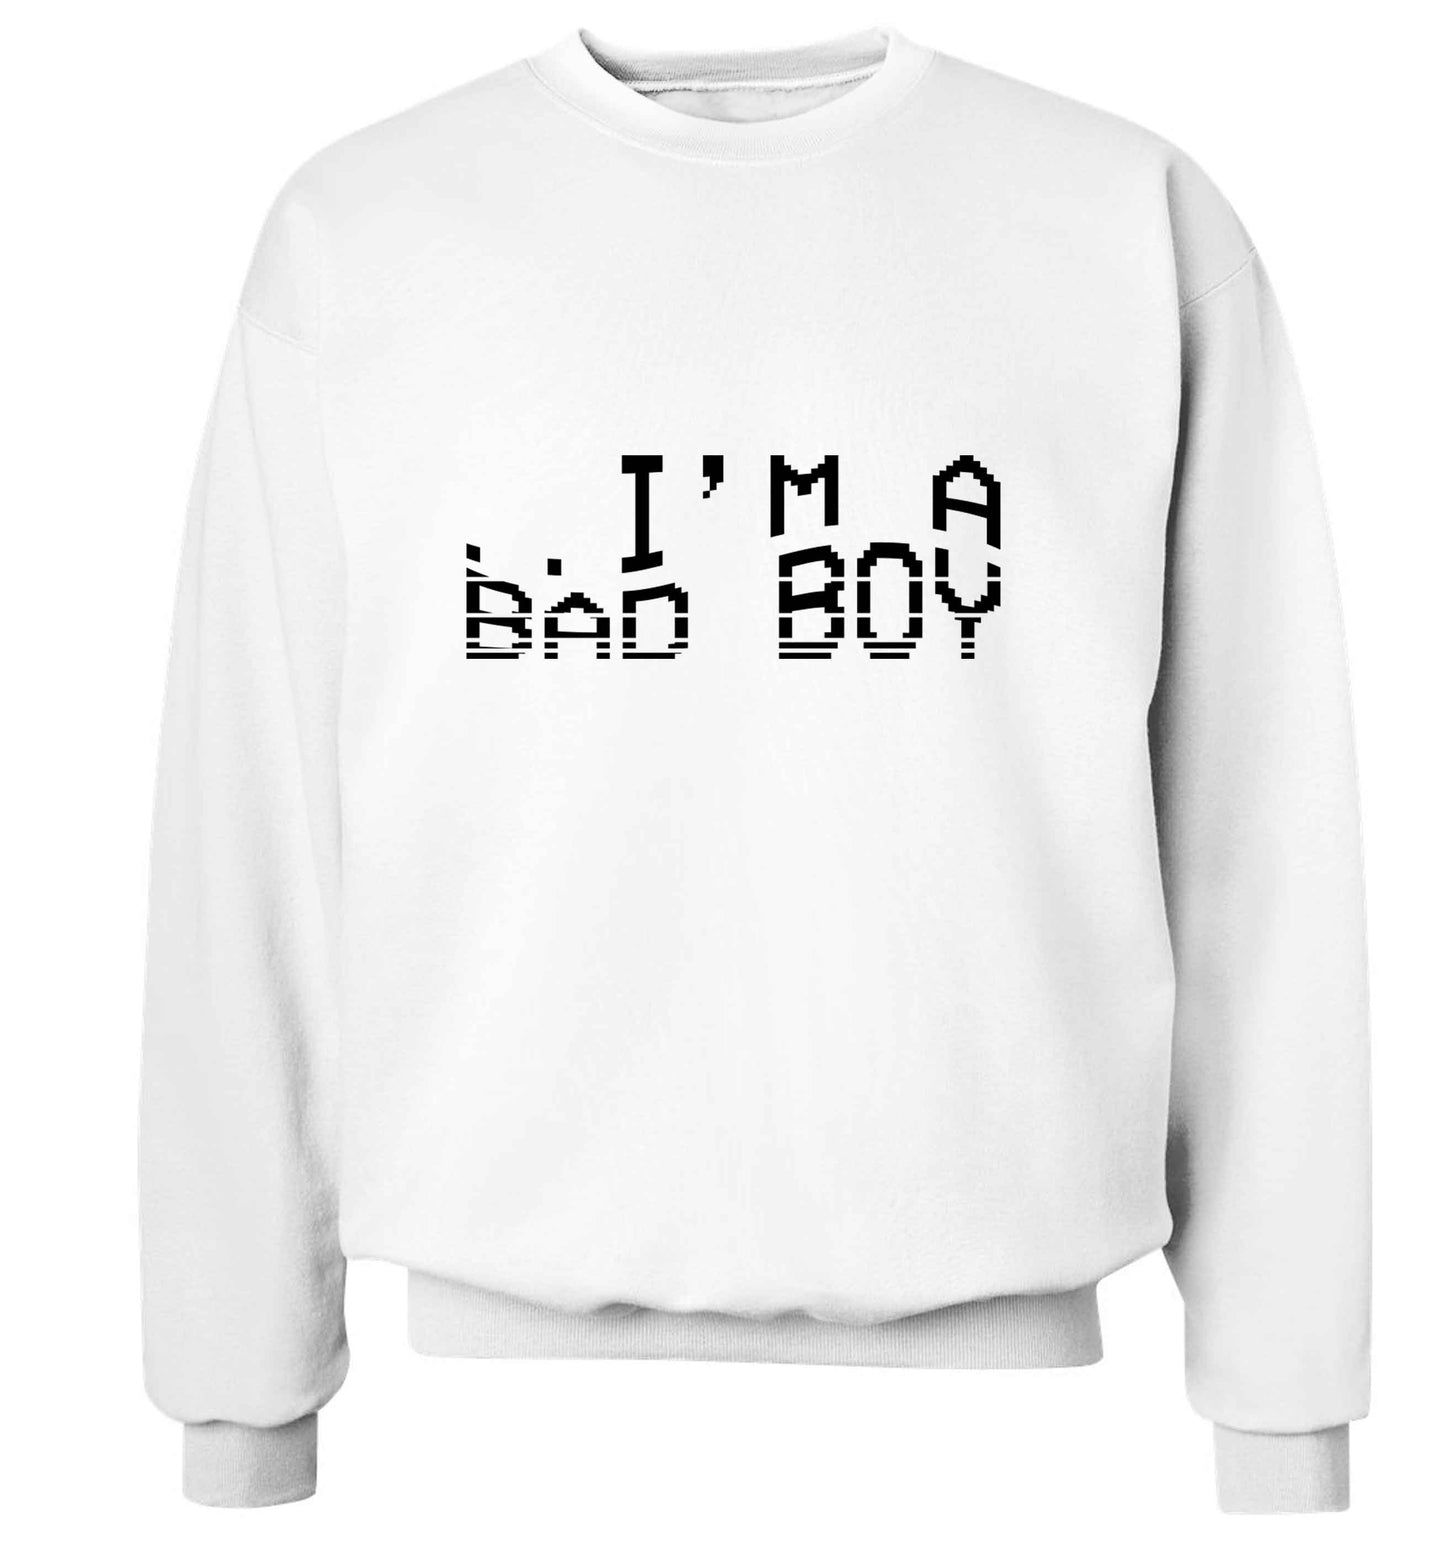 Gen Z funny viral meme  adult's unisex white sweater 2XL